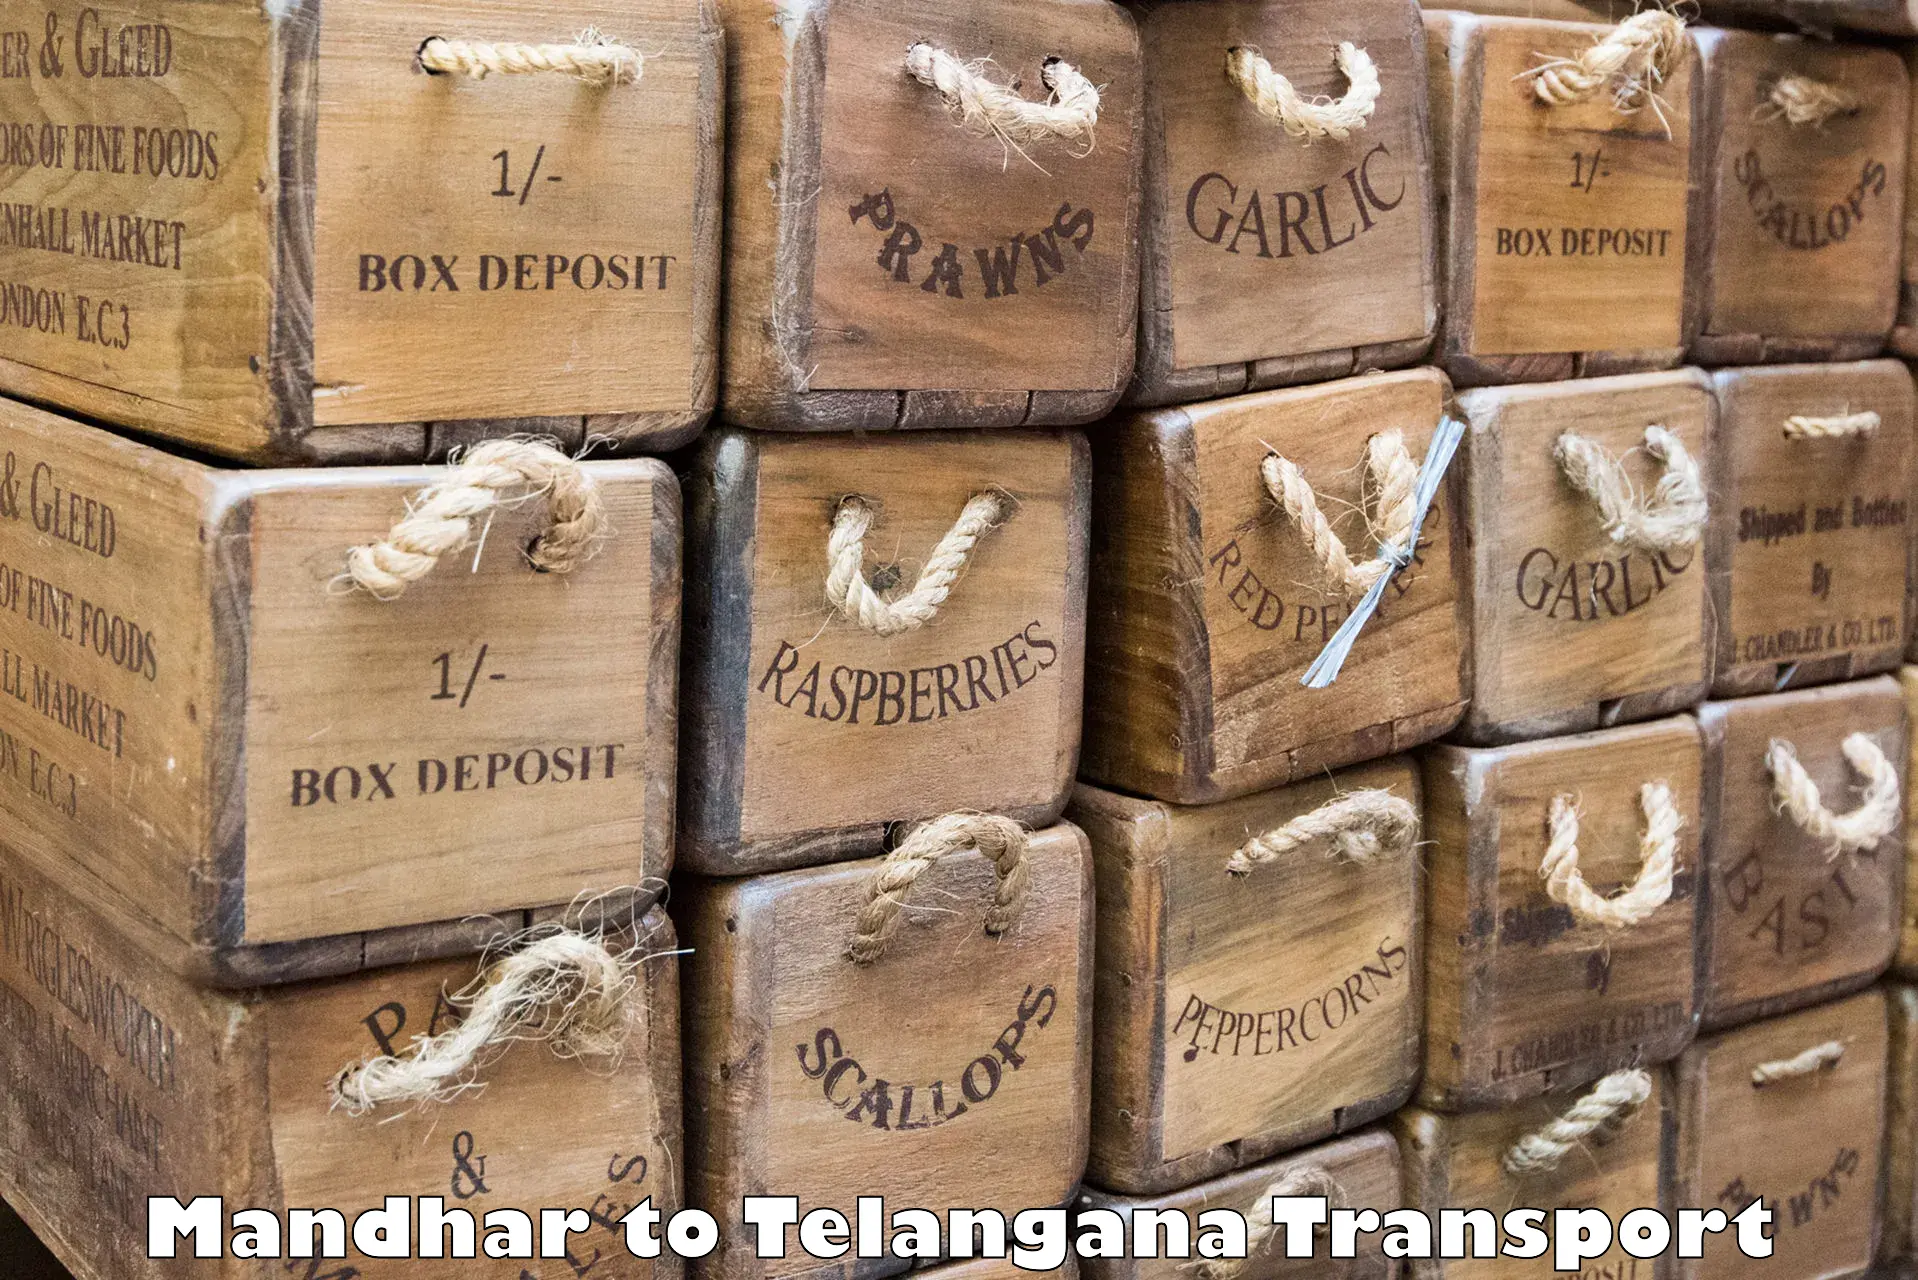 Container transport service Mandhar to Manneguda